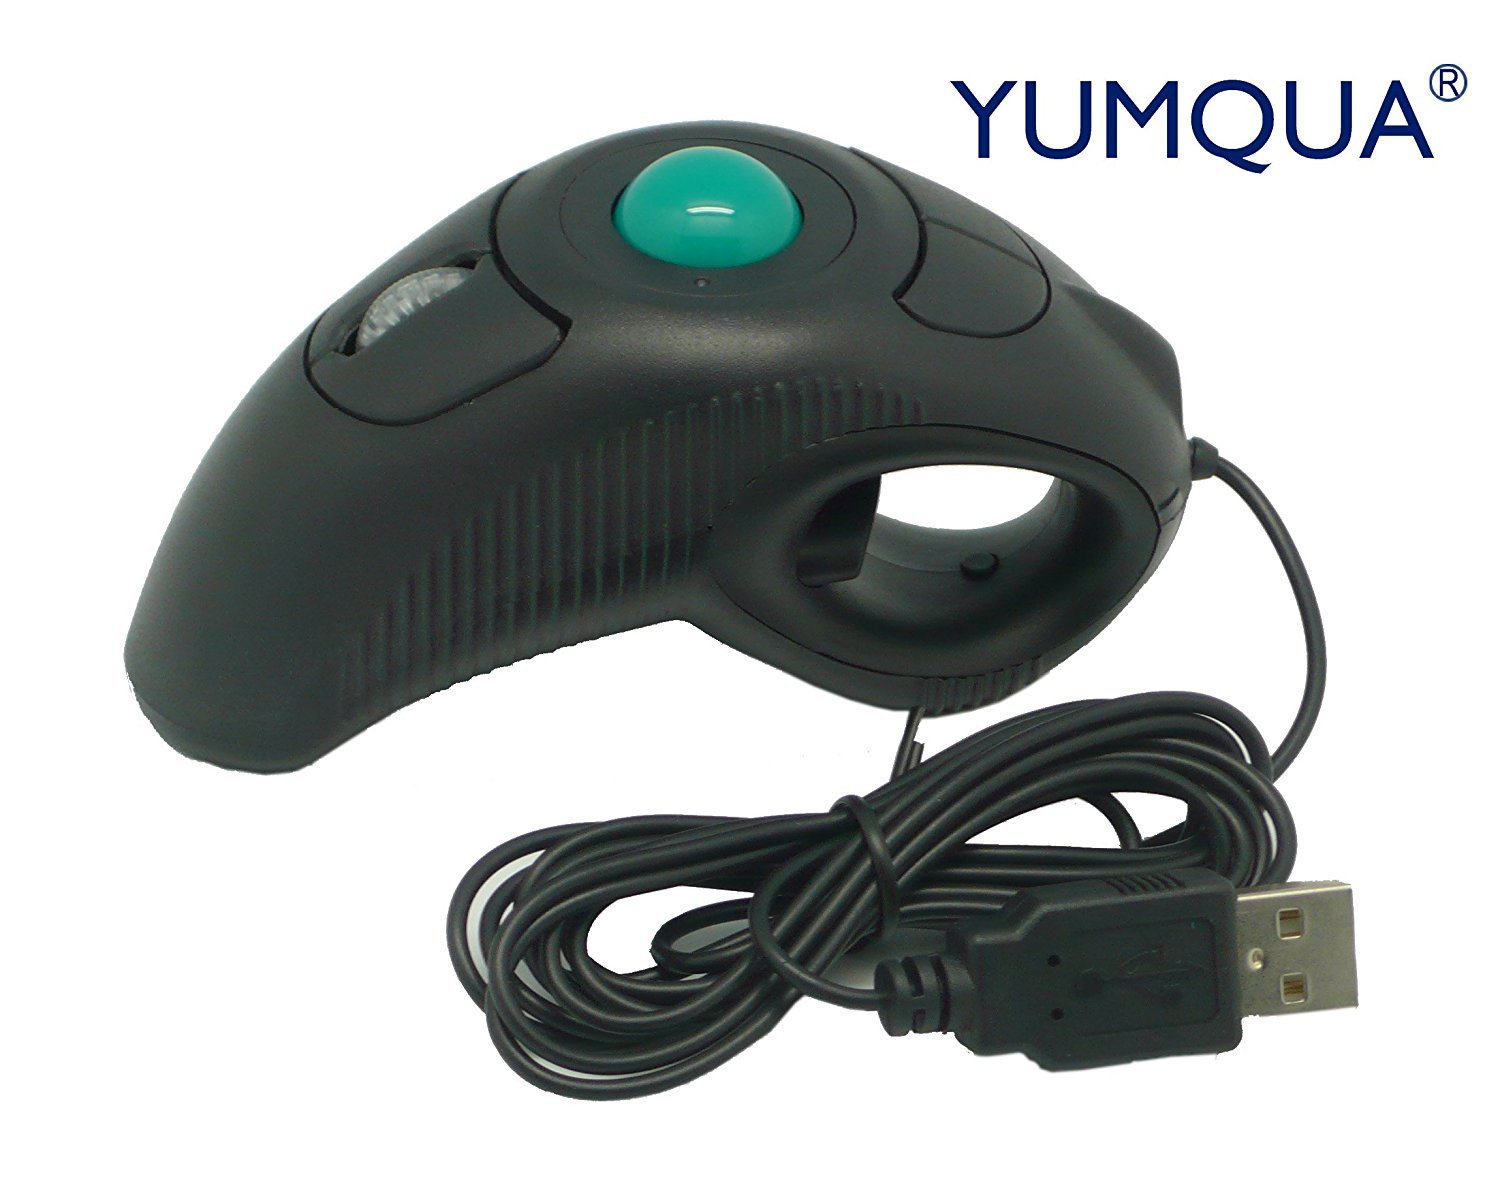 Yumqua Mouse